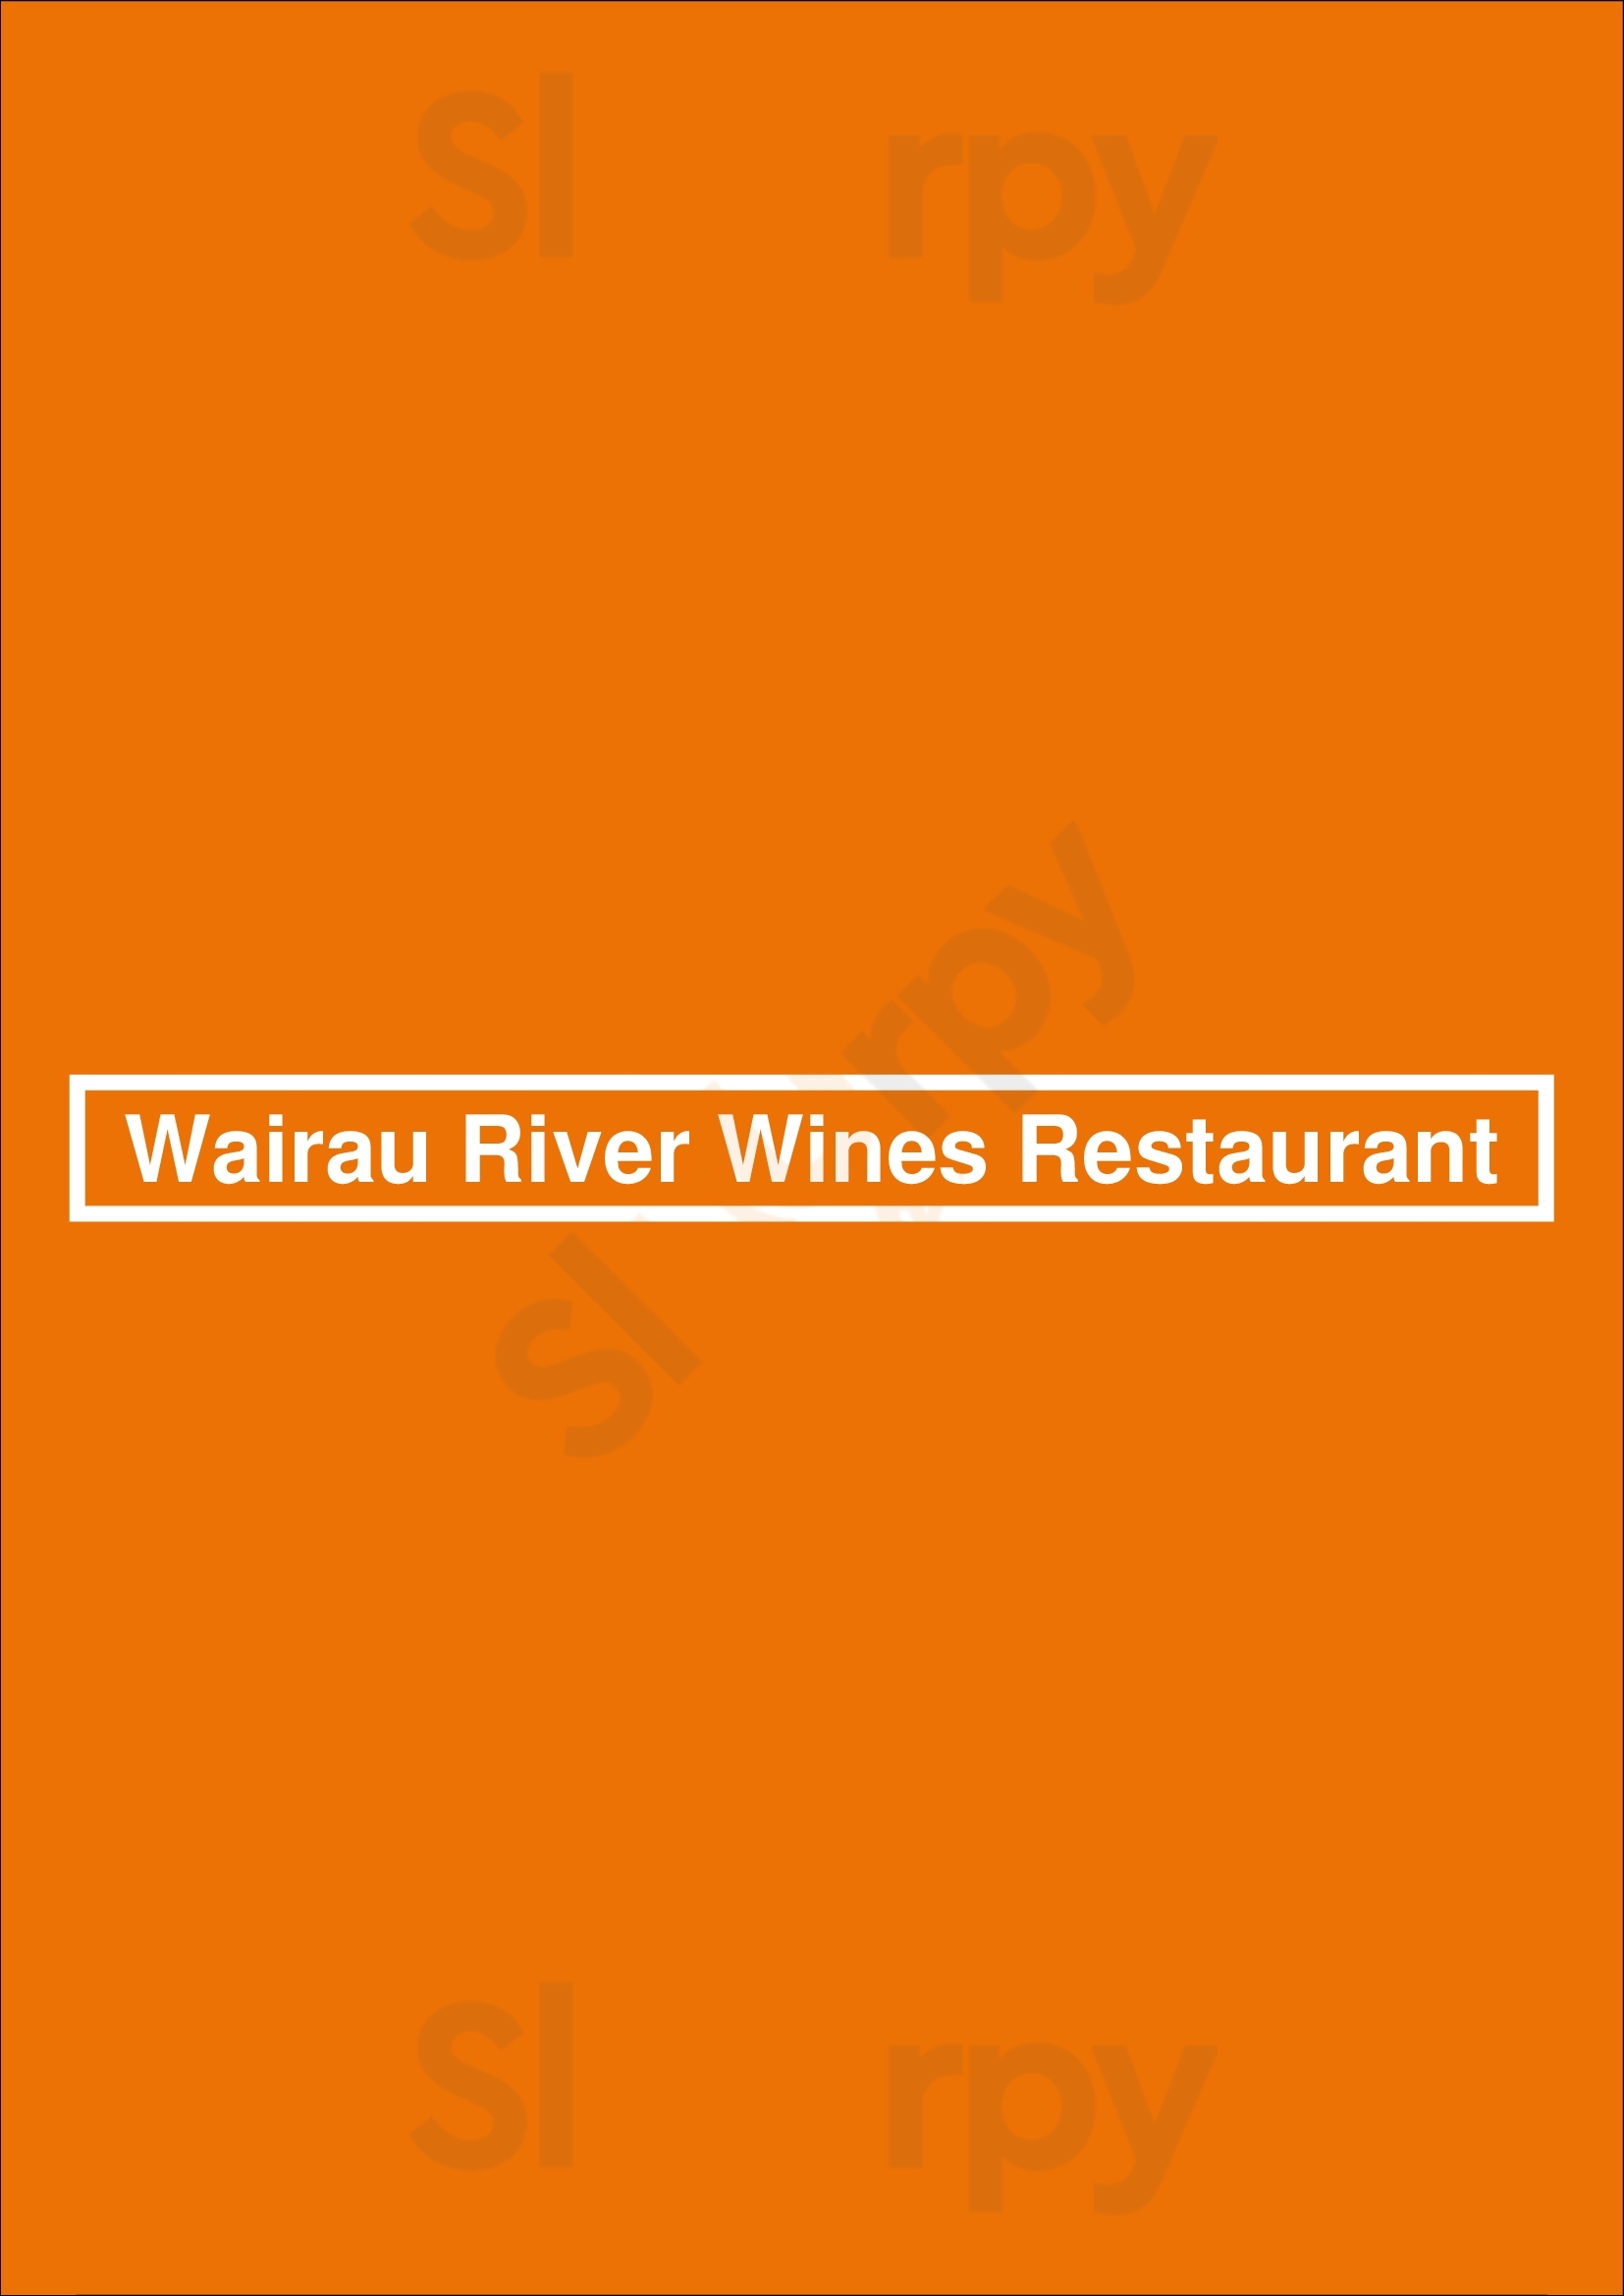 Wairau River Wines Restaurant Blenheim Menu - 1